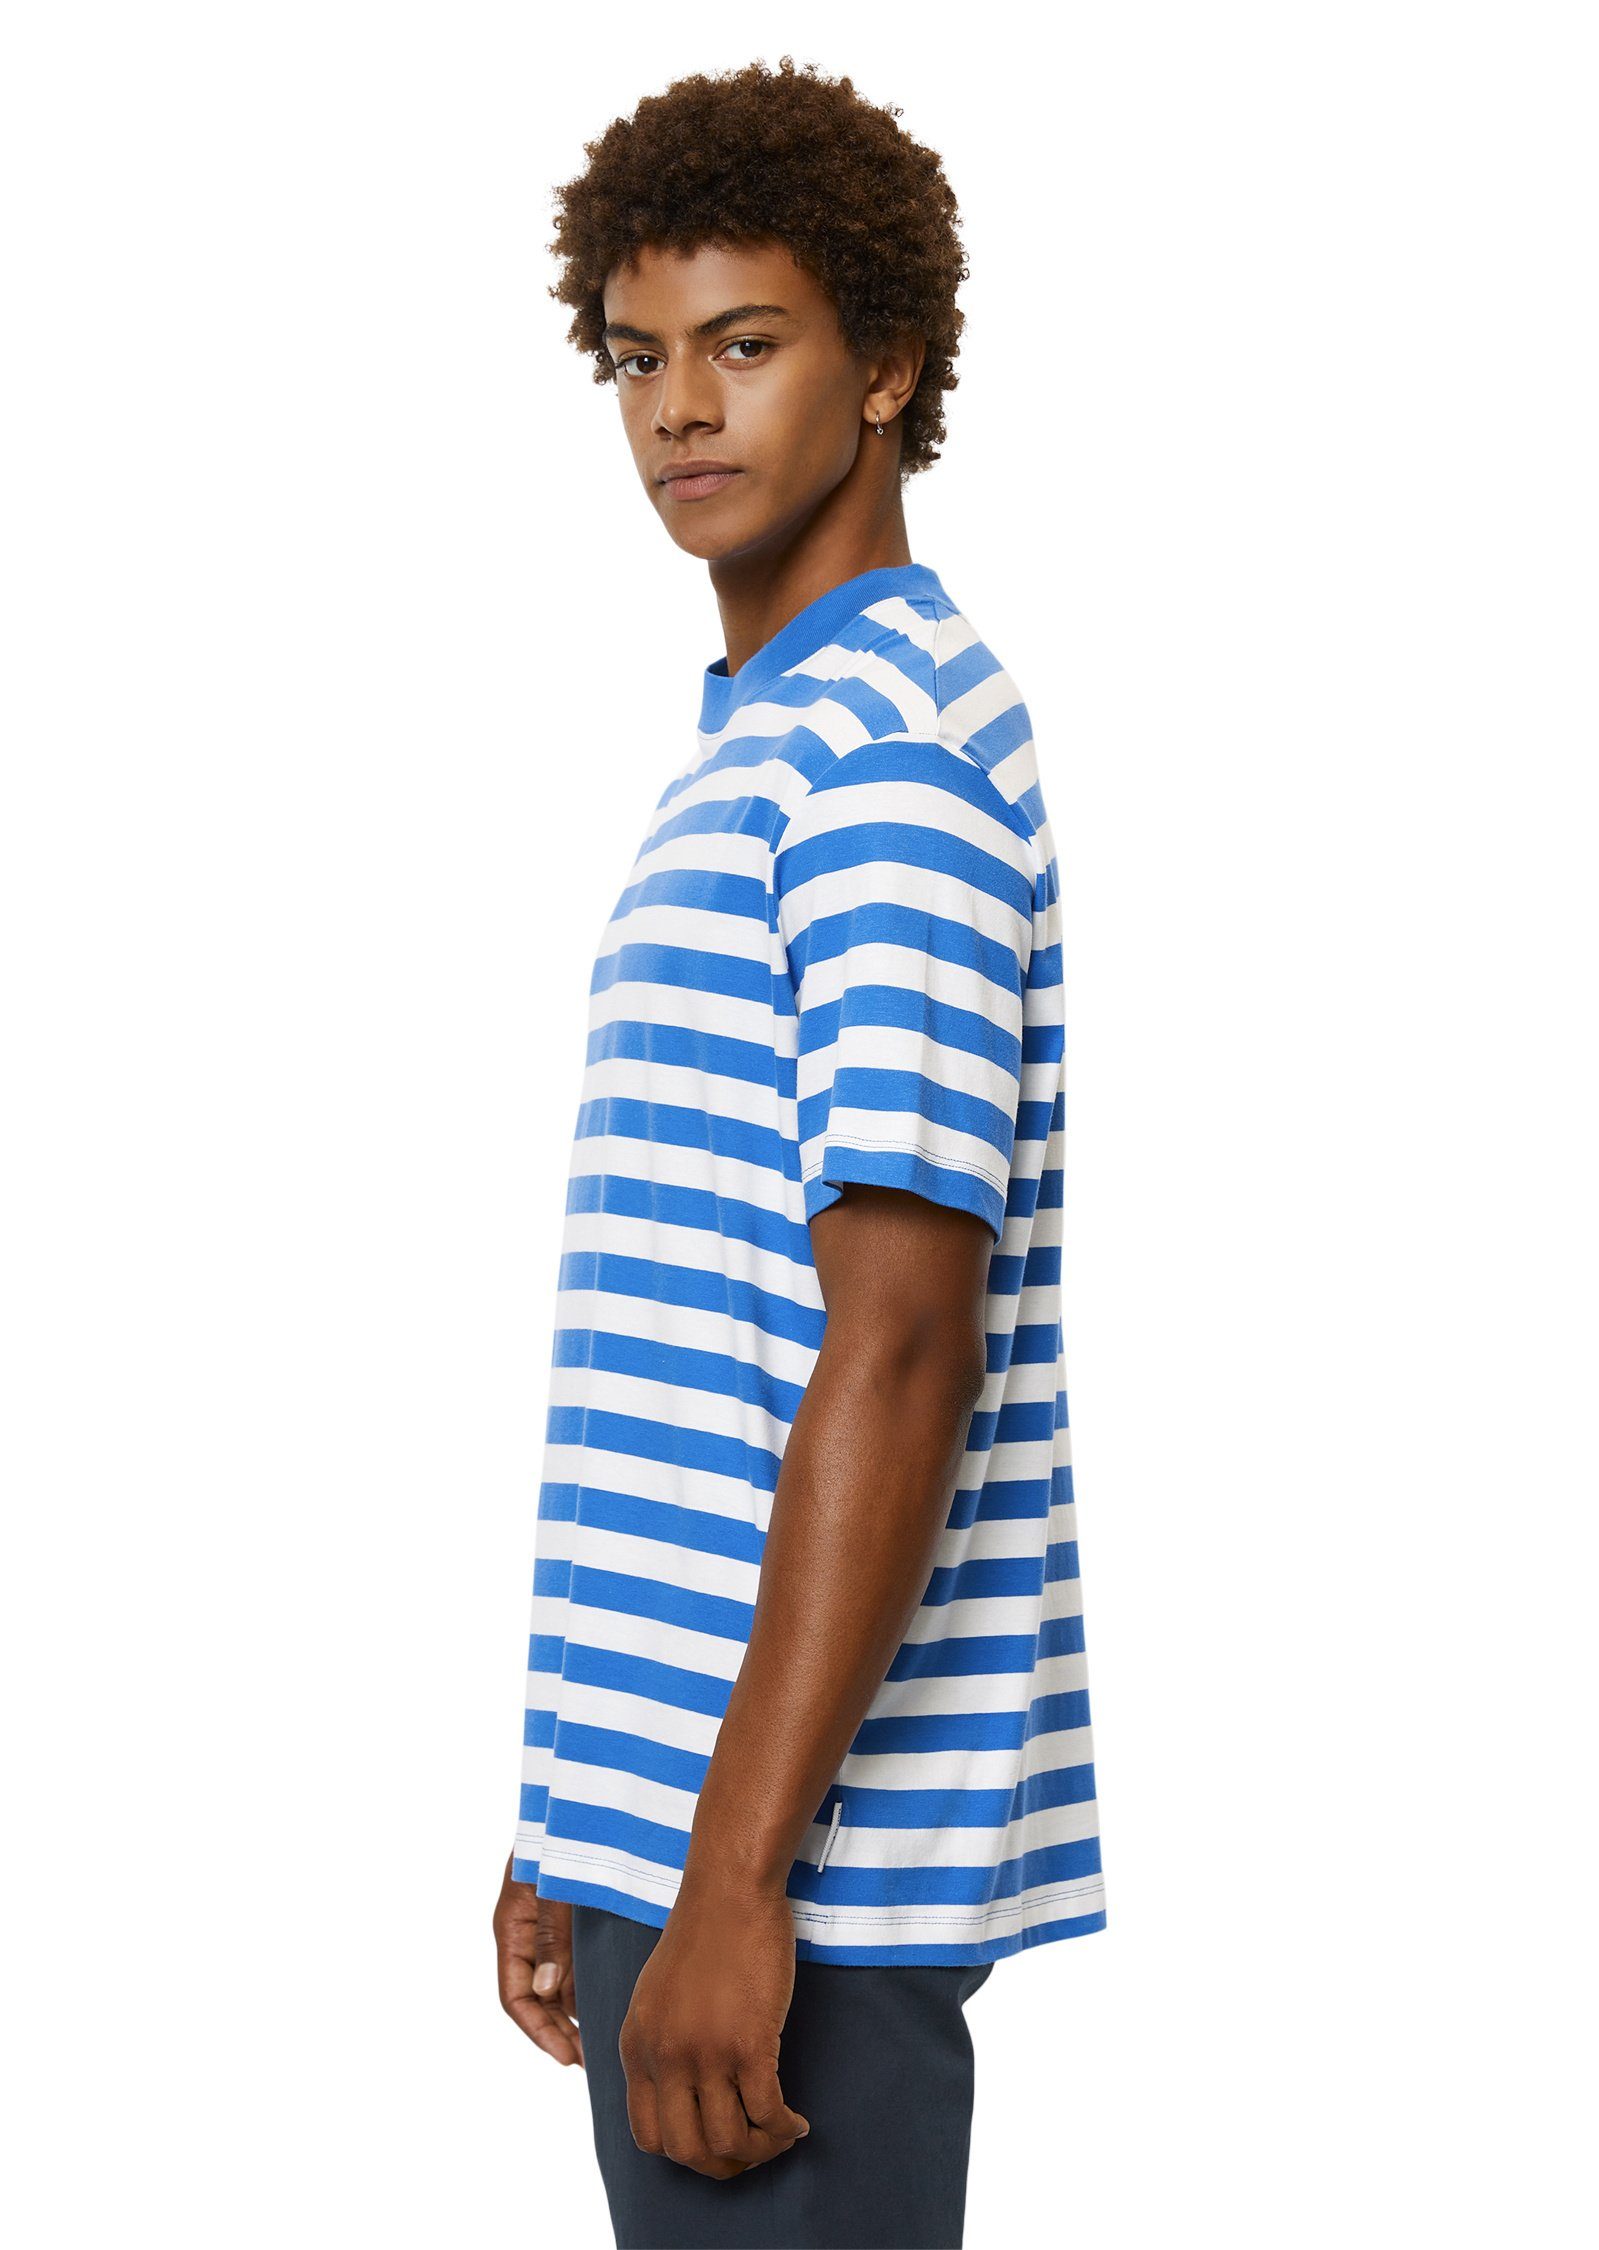 O'Polo blau mit DENIM Marc garngefärbtem Streifen-Muster T-Shirt